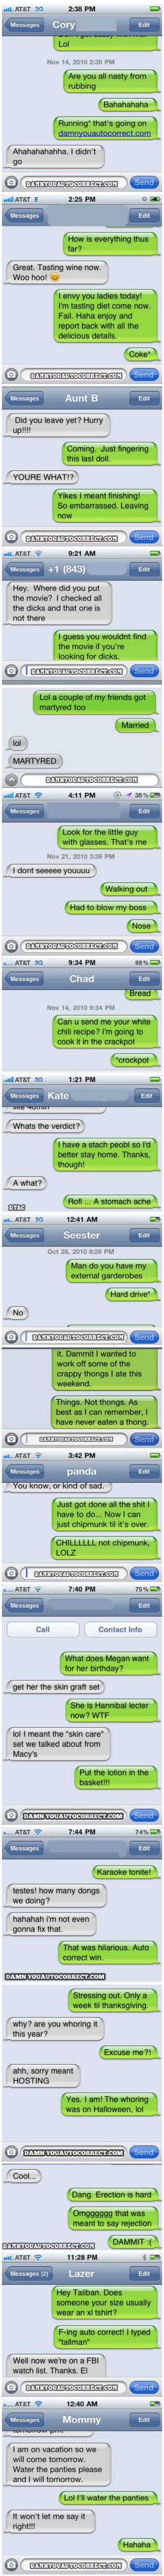 18 Hilarious iPhone Auto-correct Messages!